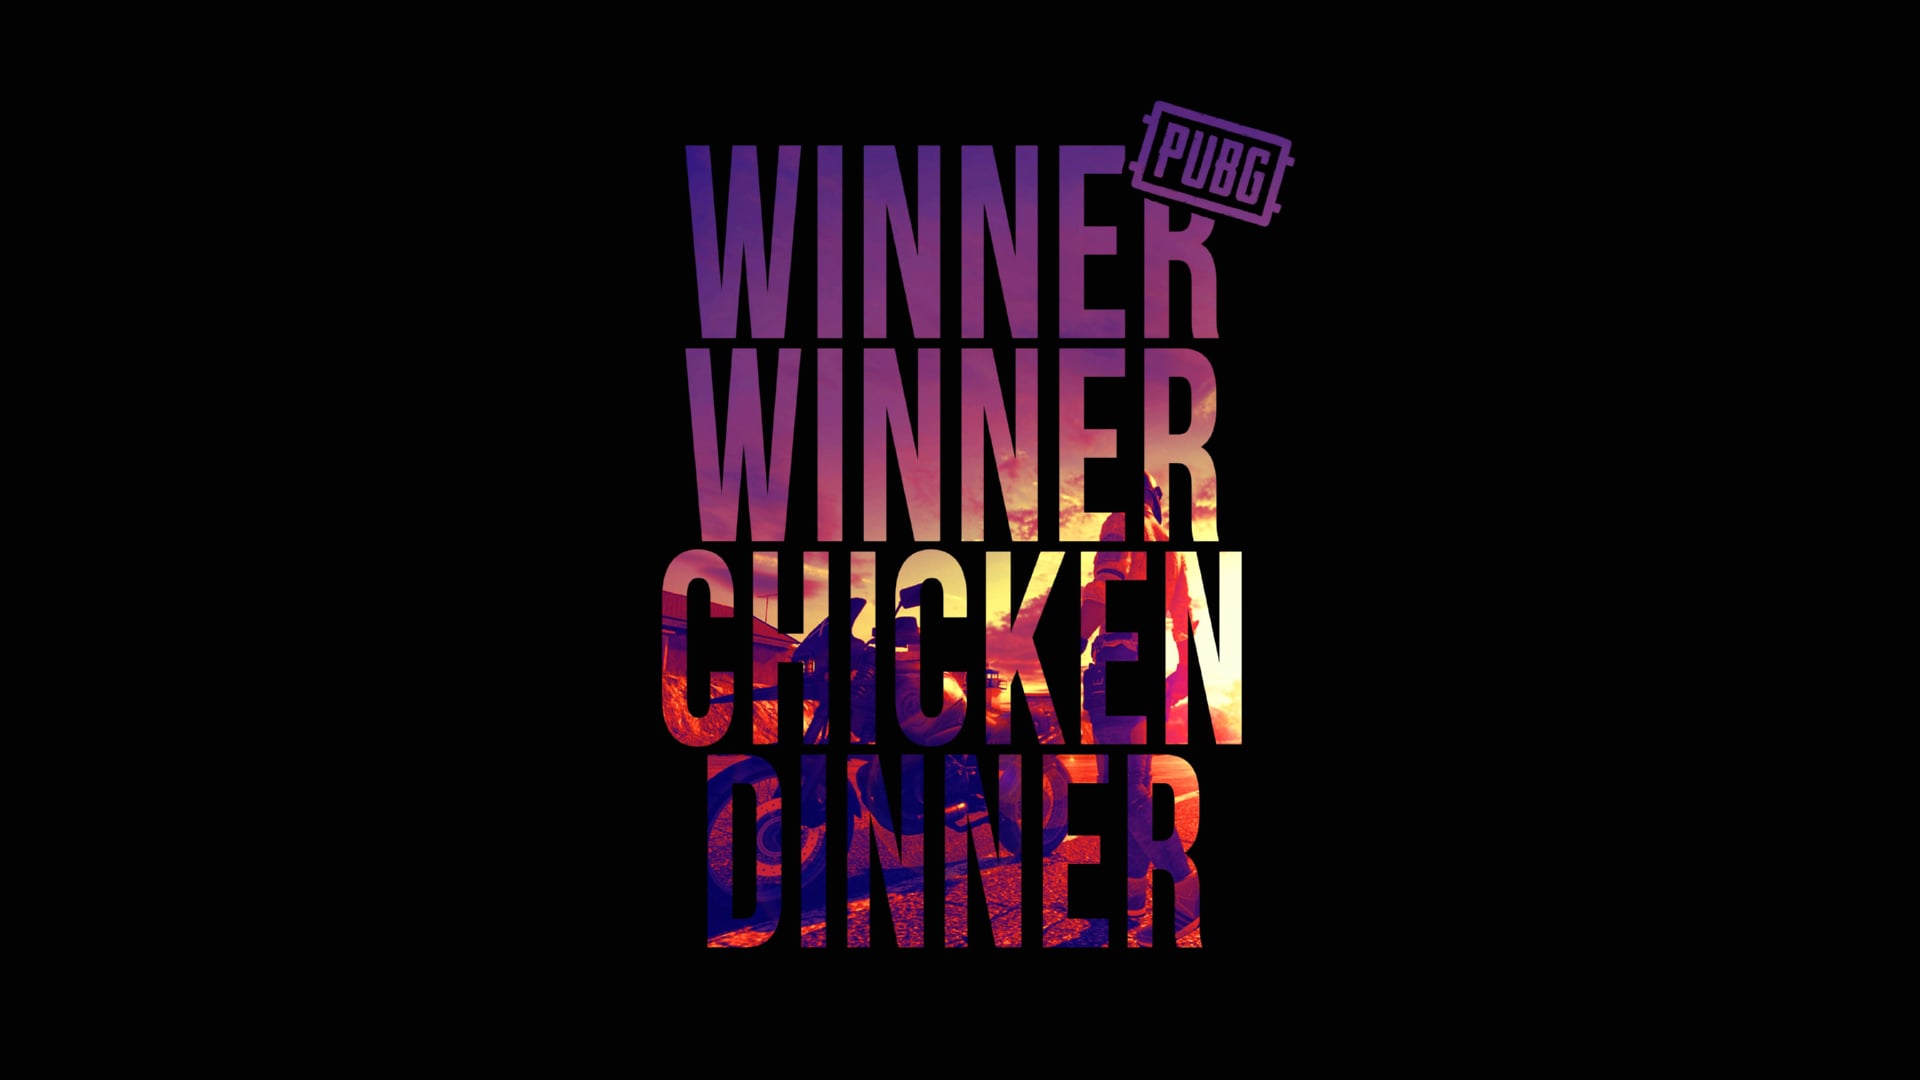 Winner Winner Chicken Dinner at 1600 x 1200 size wallpapers HD quality